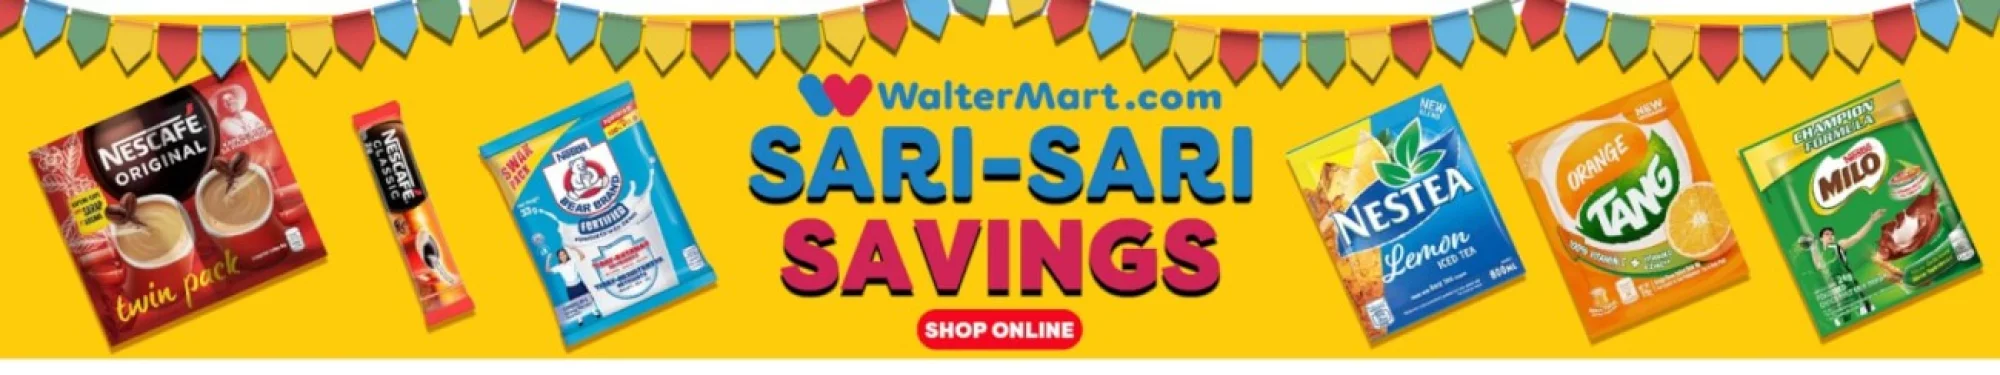 Sari-Sari Savings Brand Shop Banner (Food)